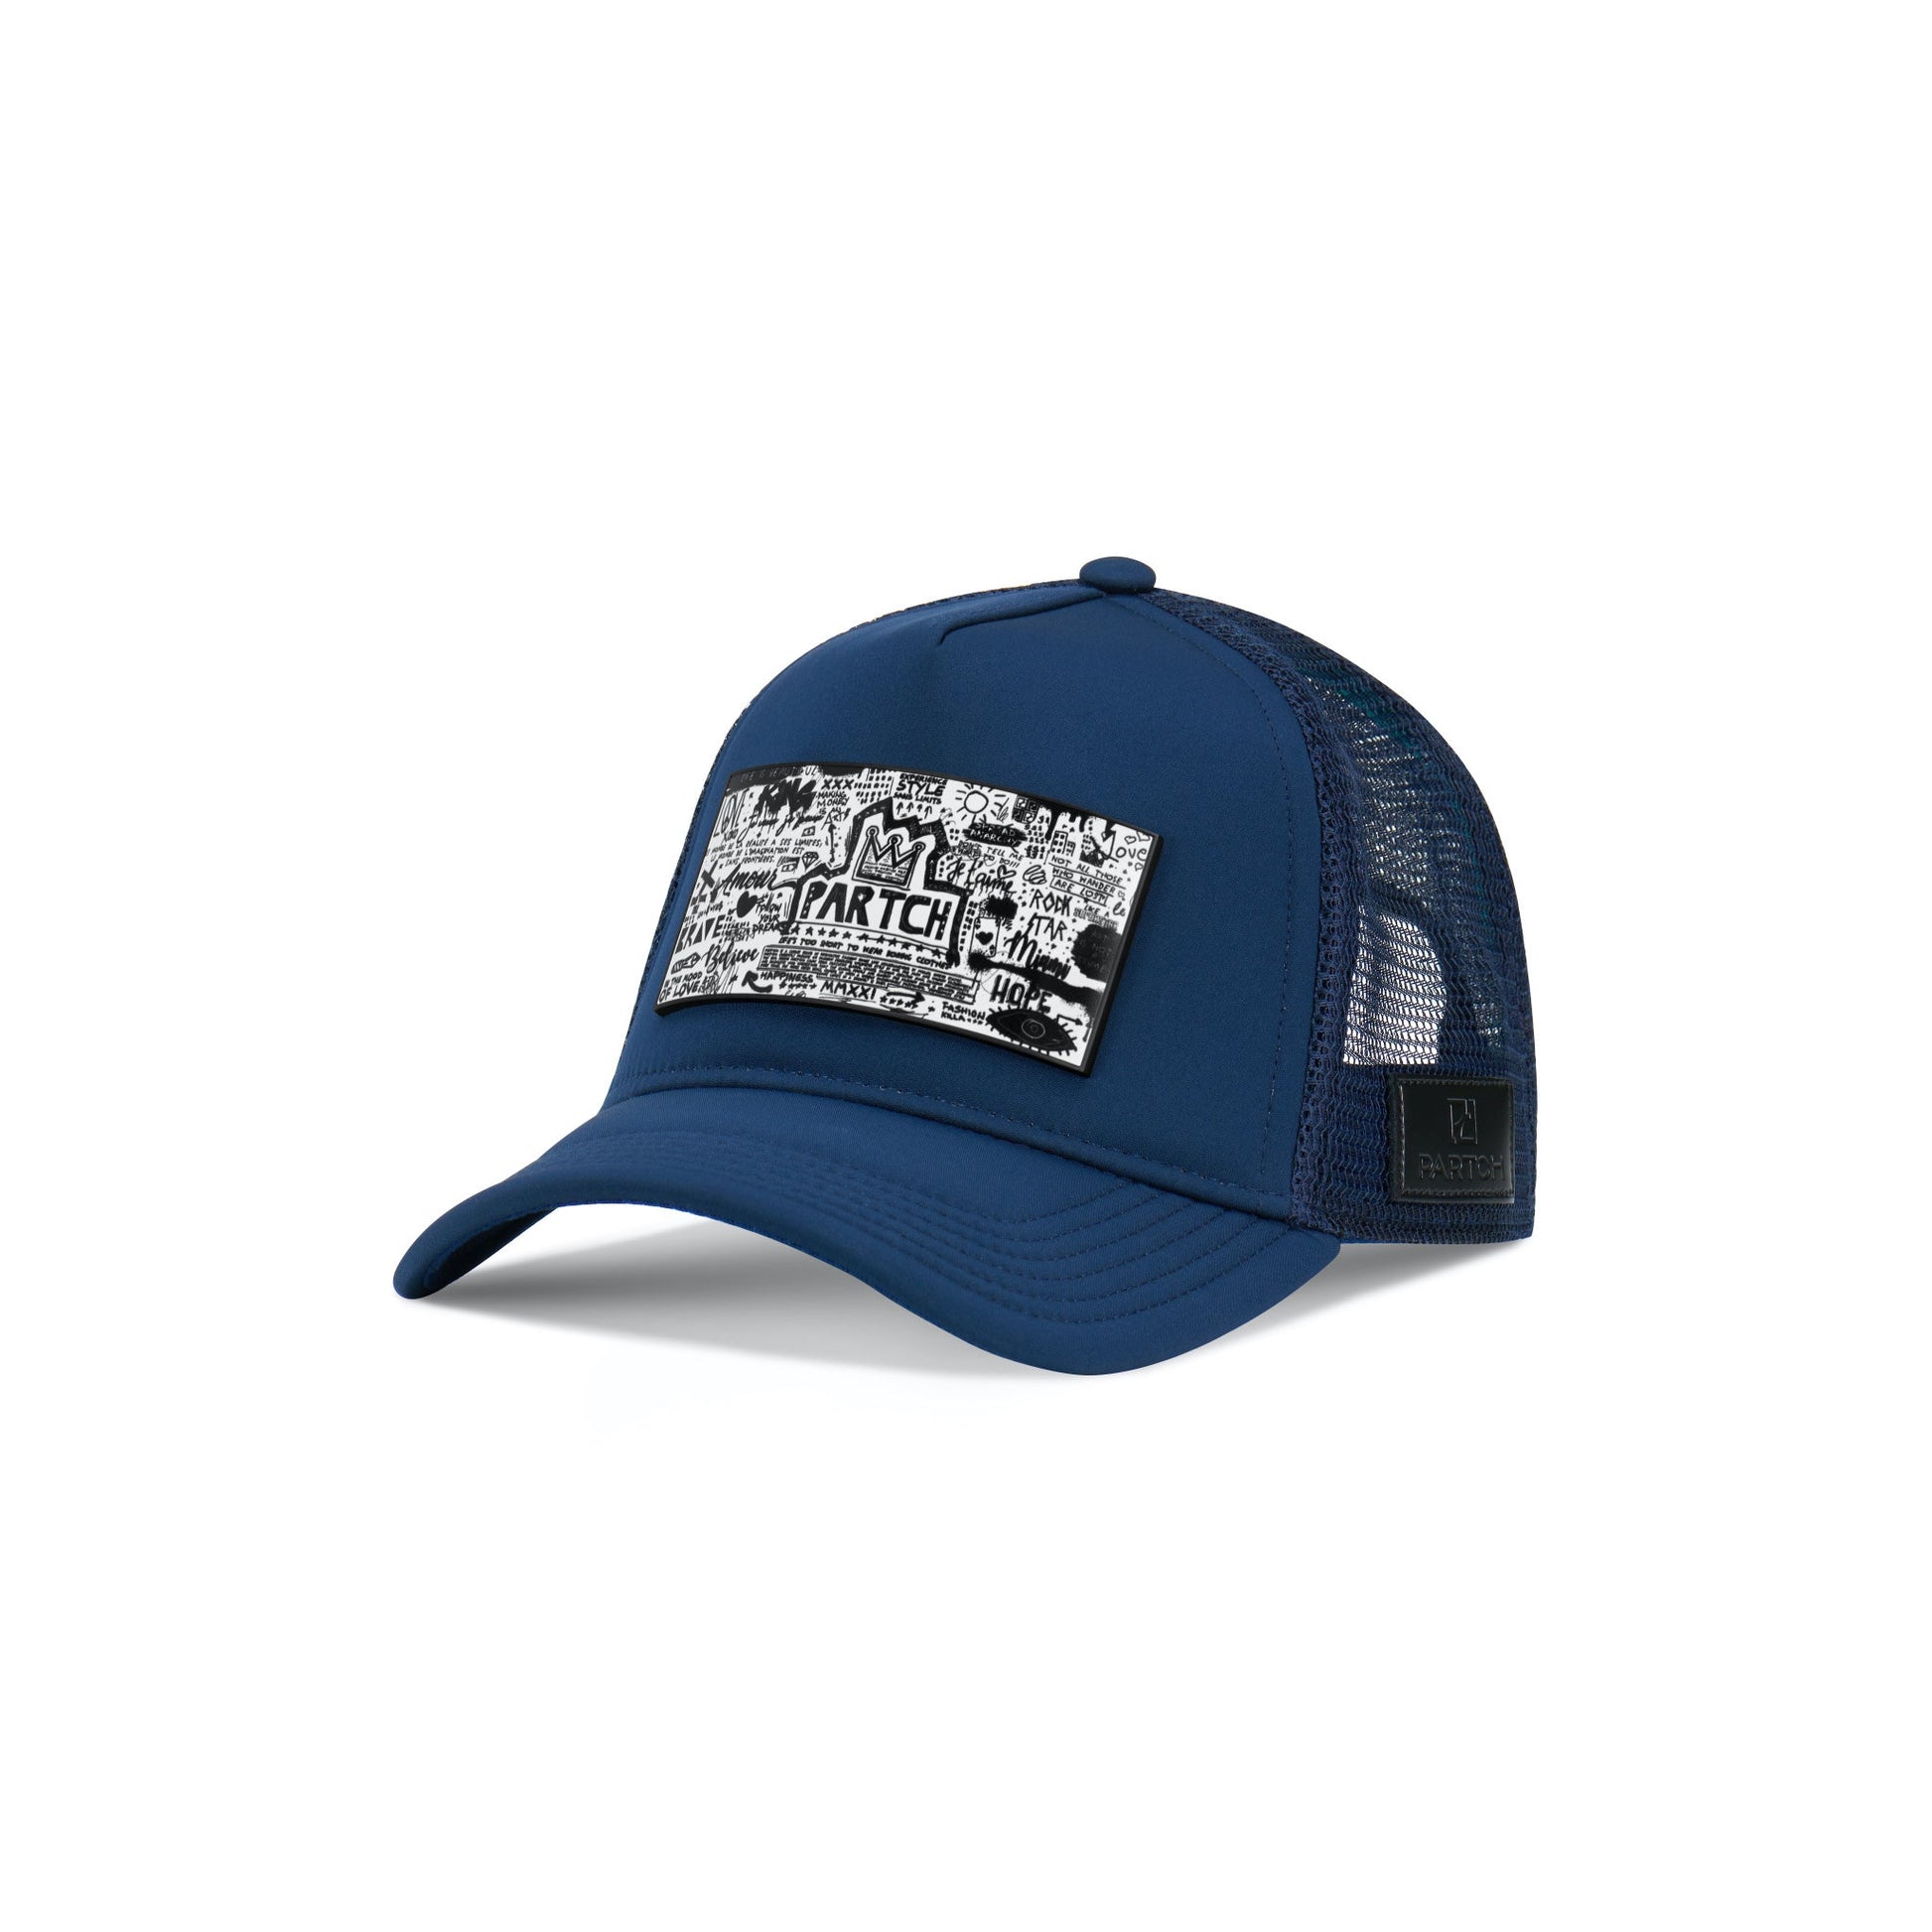 Partch Trucker Hat Navy Blue with PARTCH-Clip Pop Love Front View